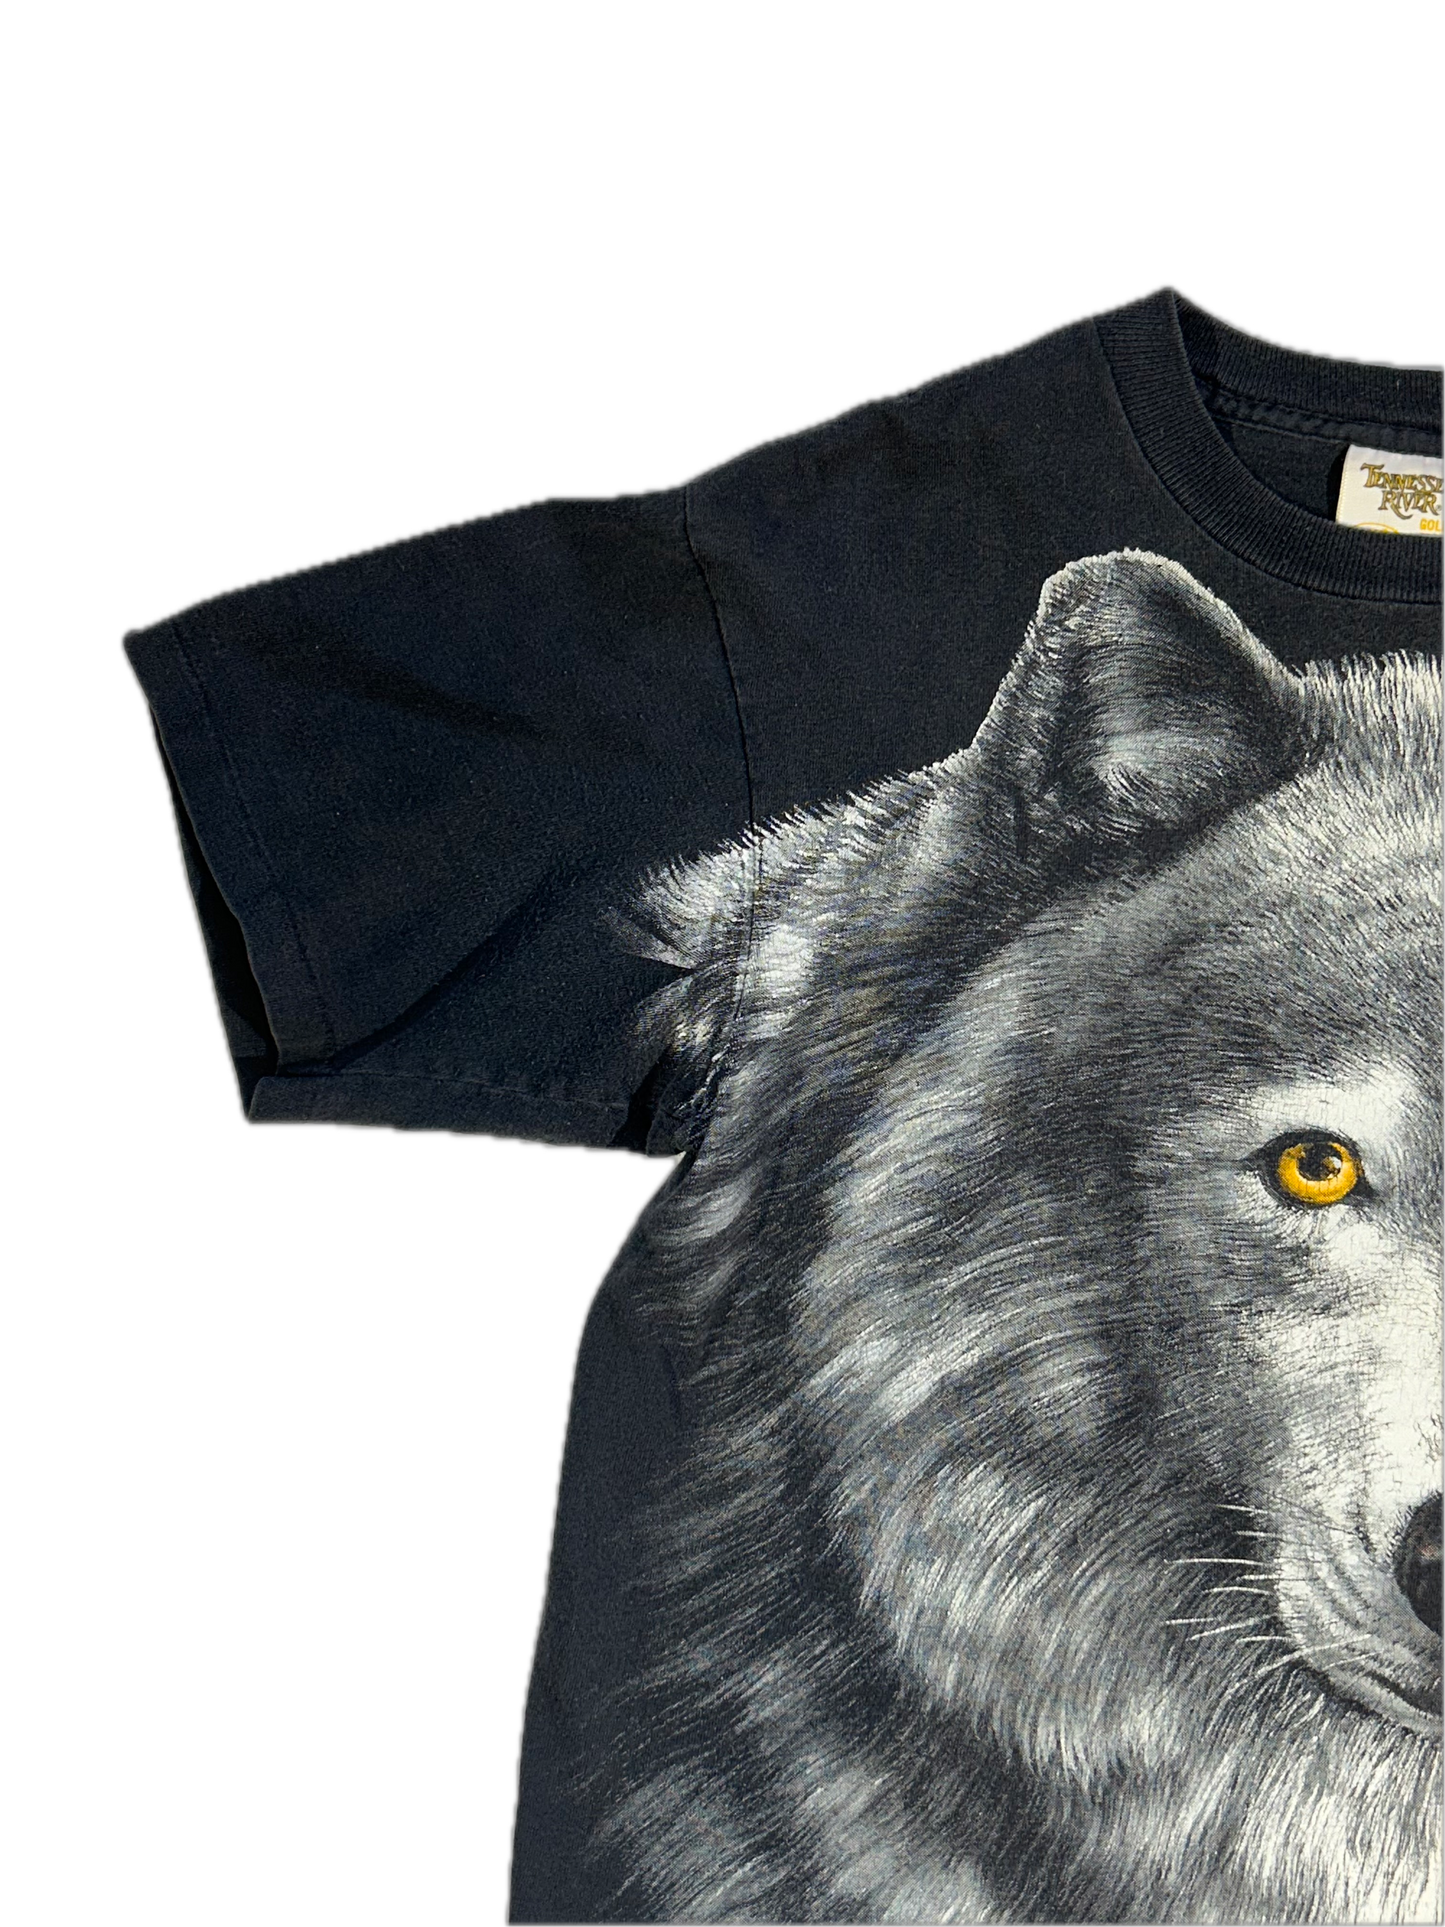 Vintage Wolf T-Shirt Single Stitch Animal